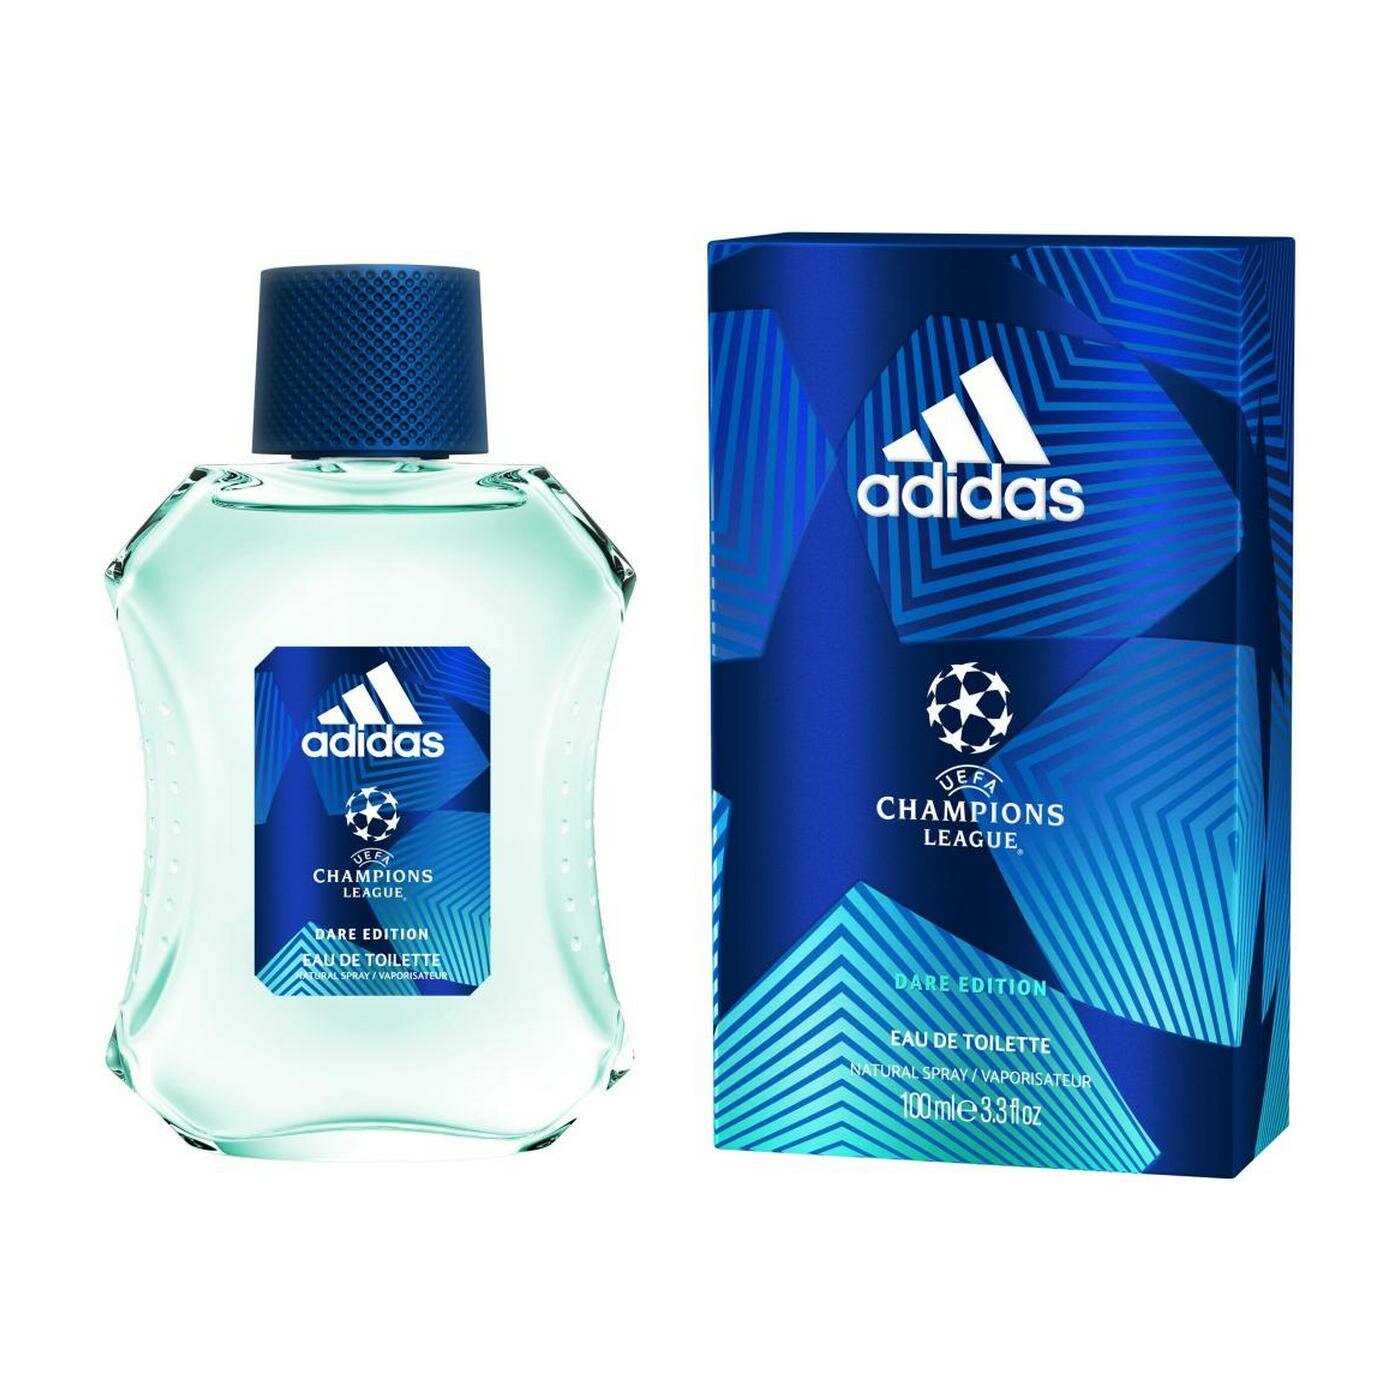 Adidas туалетная вода UEFA Champions League Dare Edition, 100 мл